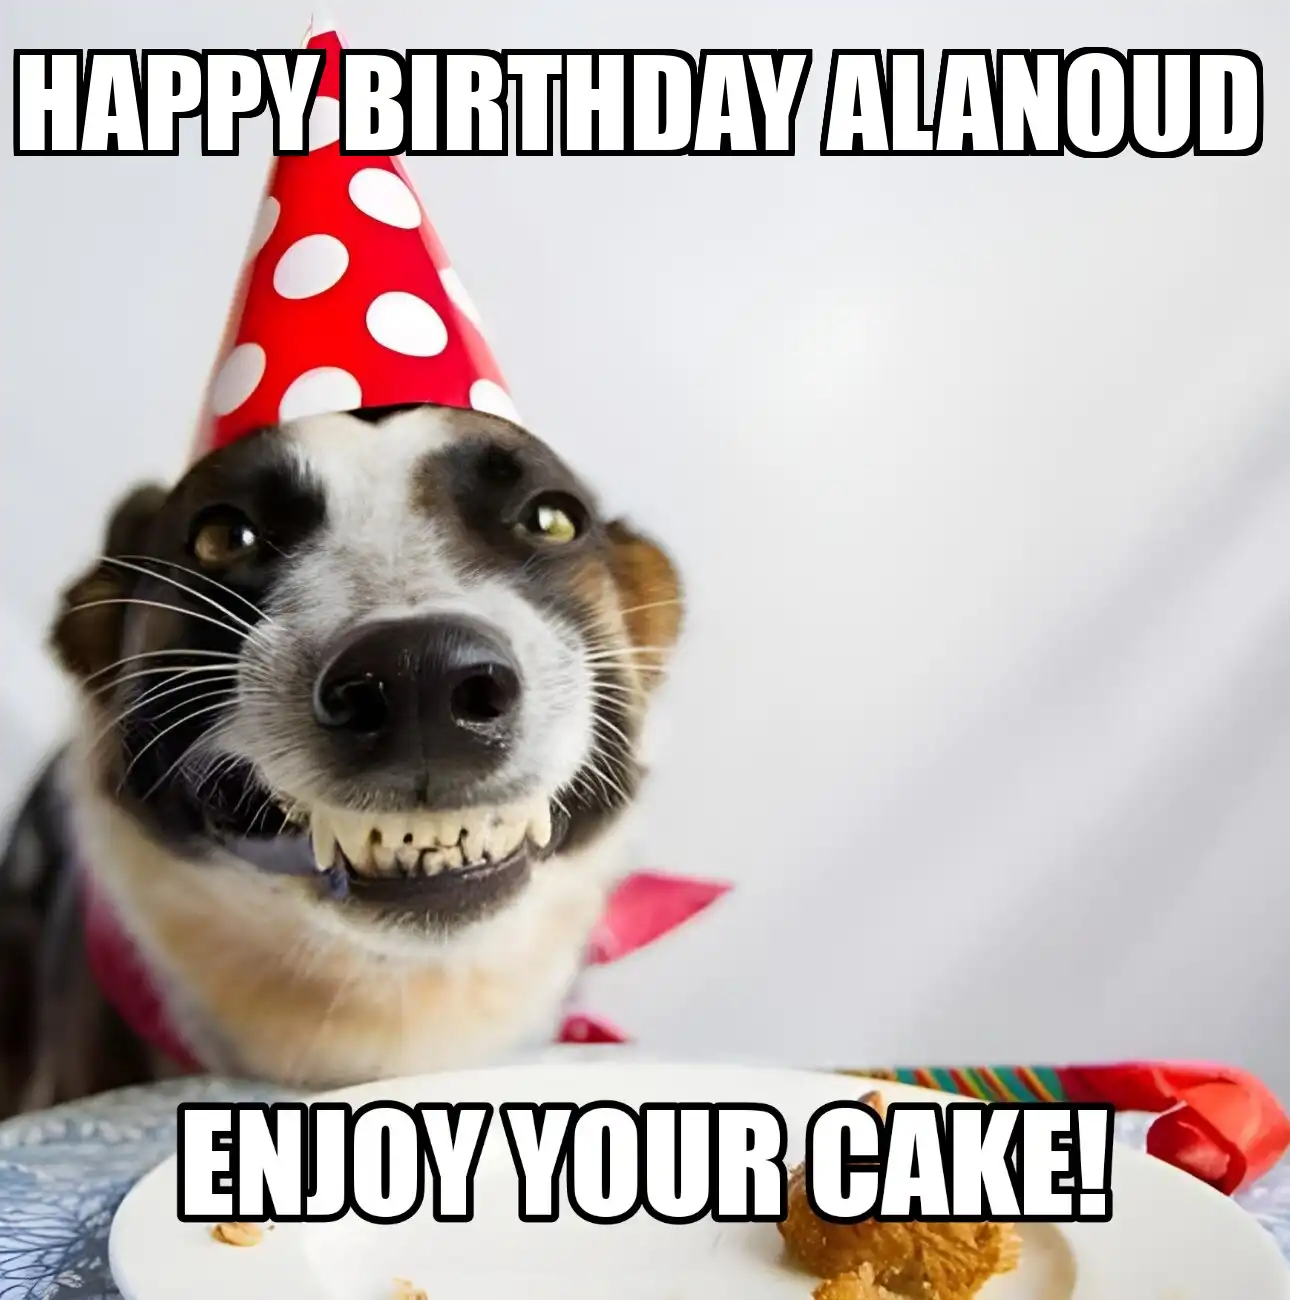 Happy Birthday Alanoud Enjoy Your Cake Dog Meme